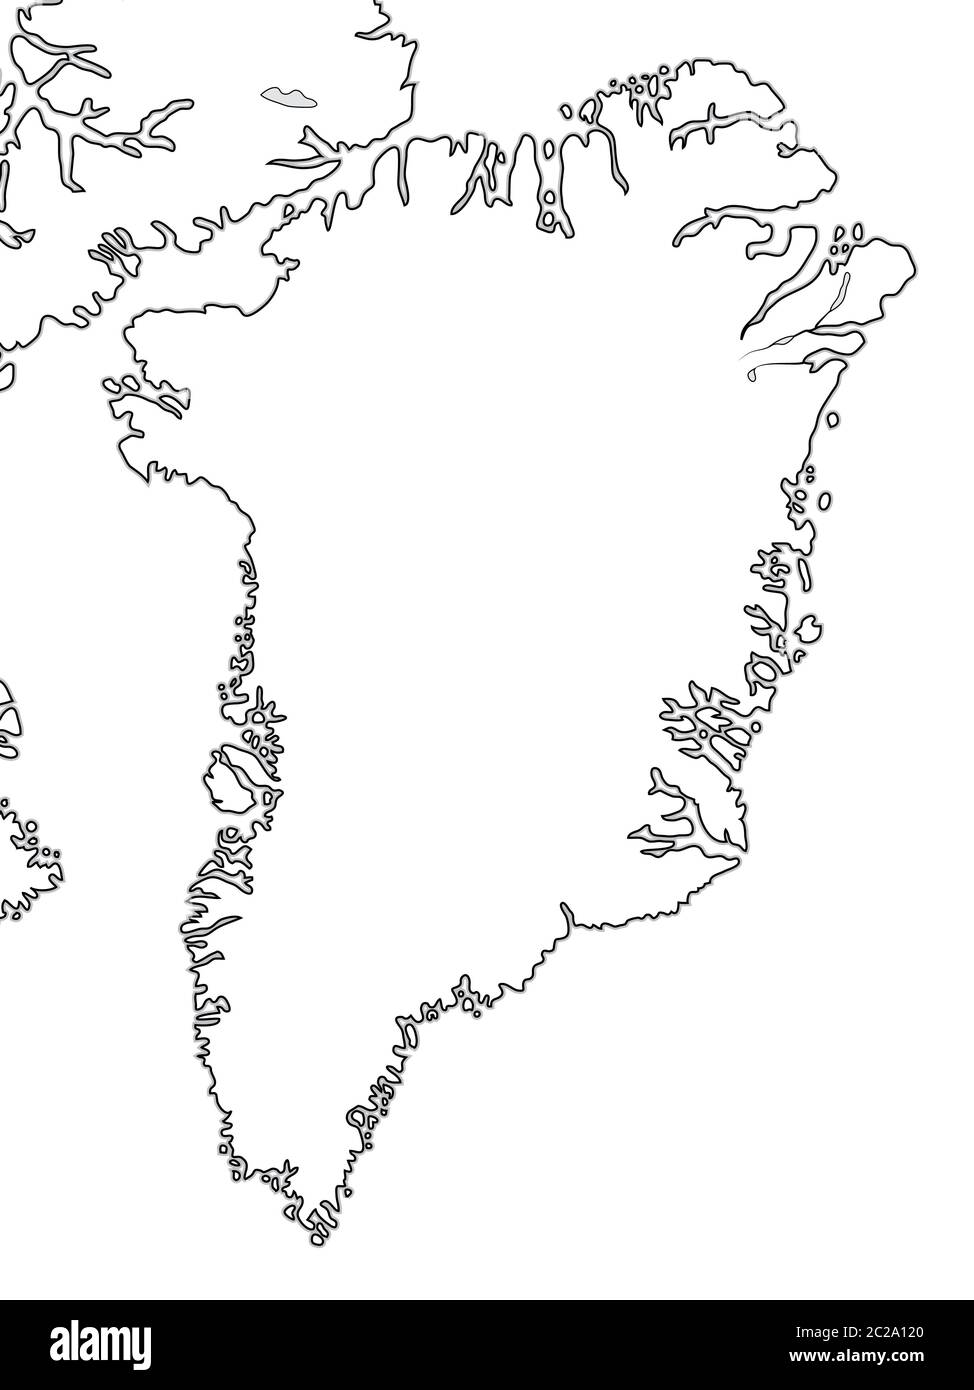 Mappa mondiale DELLA GROENLANDIA: Groenlandia, Arcipelago Artico, Oceano Atlantico. Grafico geografico. Foto Stock